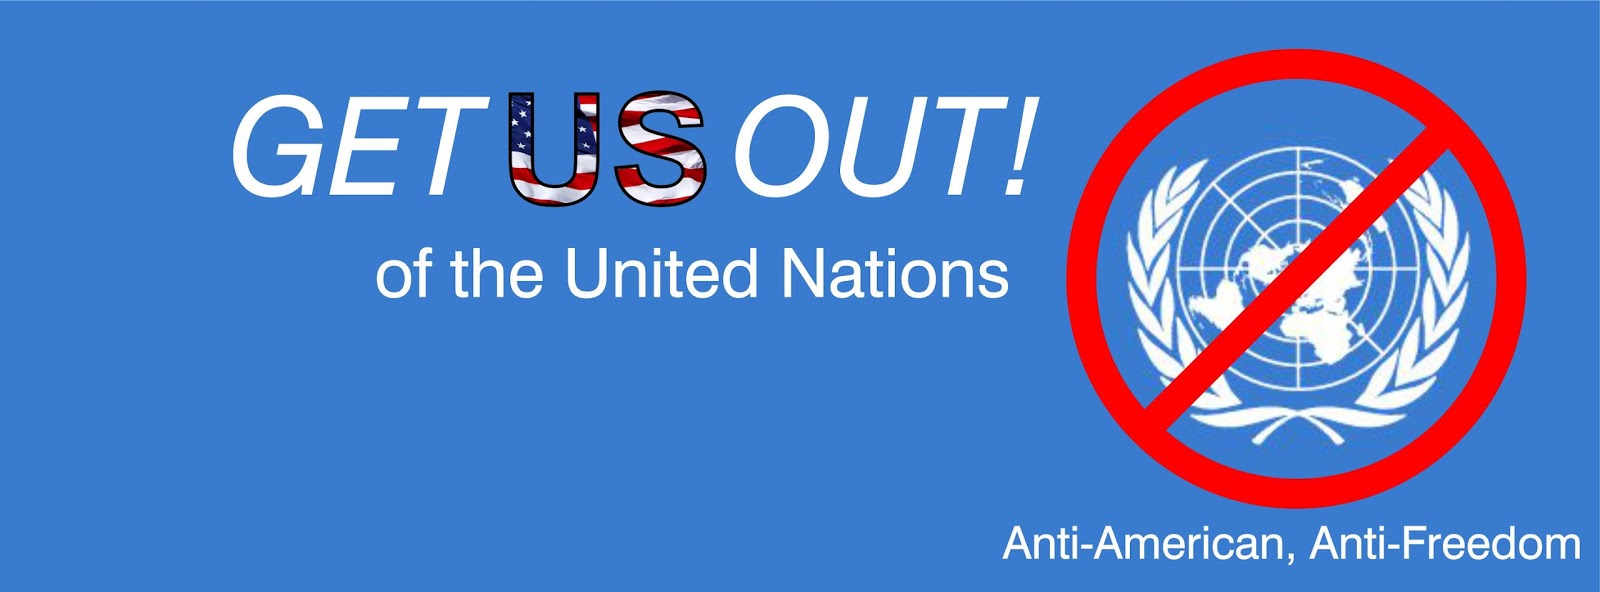 http://1.bp.blogspot.com/-K1u18Wxc6Mg/UiKeuSqmROI/AAAAAAAAATo/djQwocTMCYY/s1600/GET-US-OUT_of_the_United_Nations.jpg